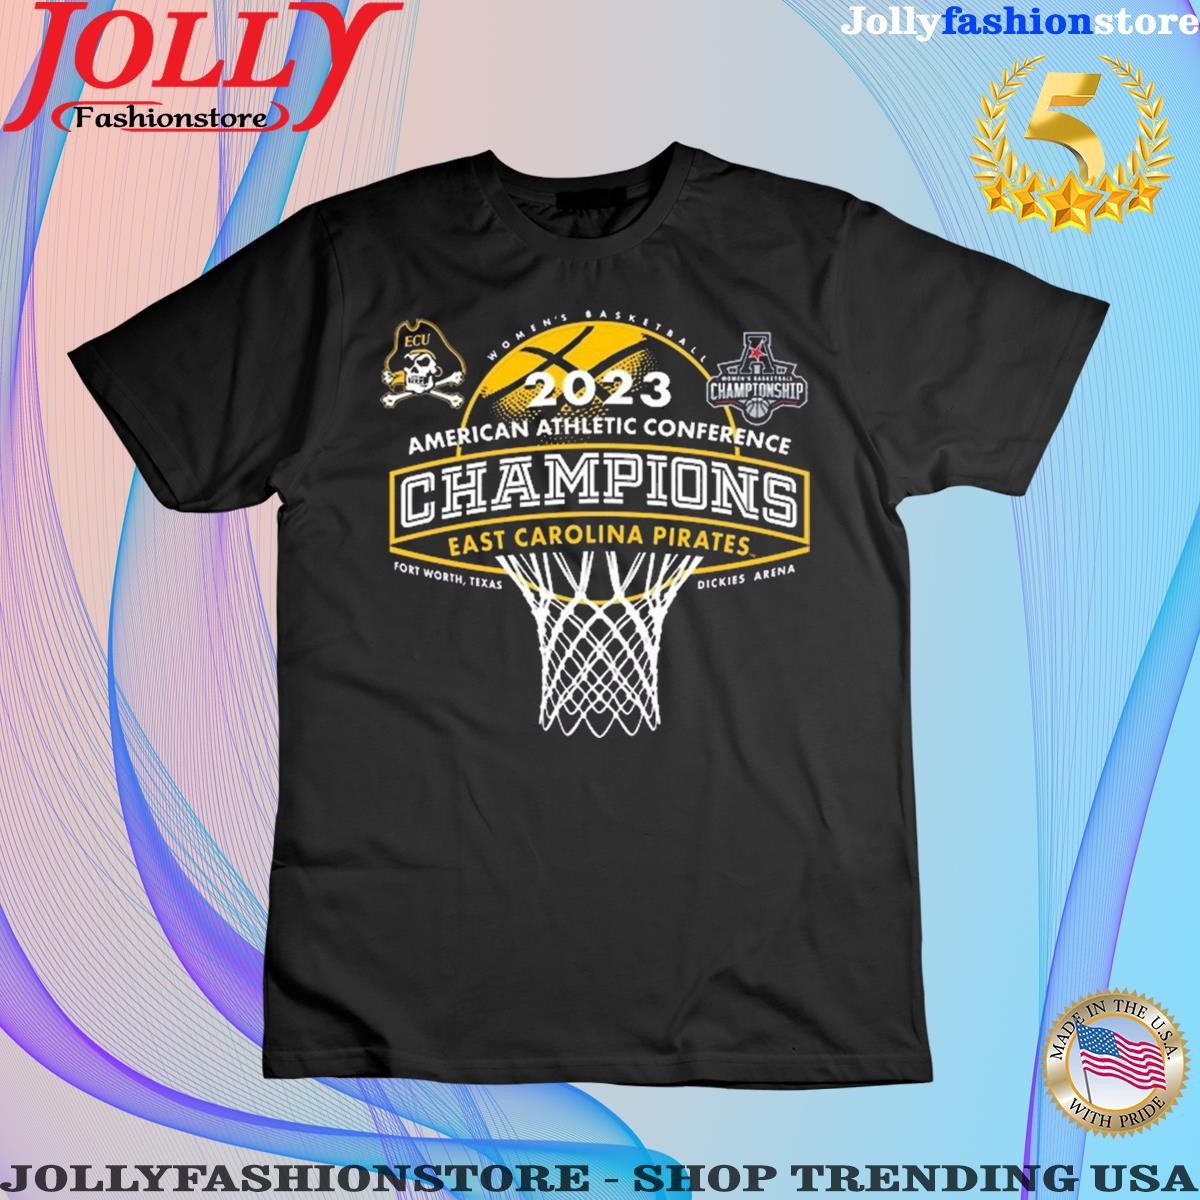 Ecu pirates women's basketball American athletic conference champions east carolina pirates women tee shirt.png